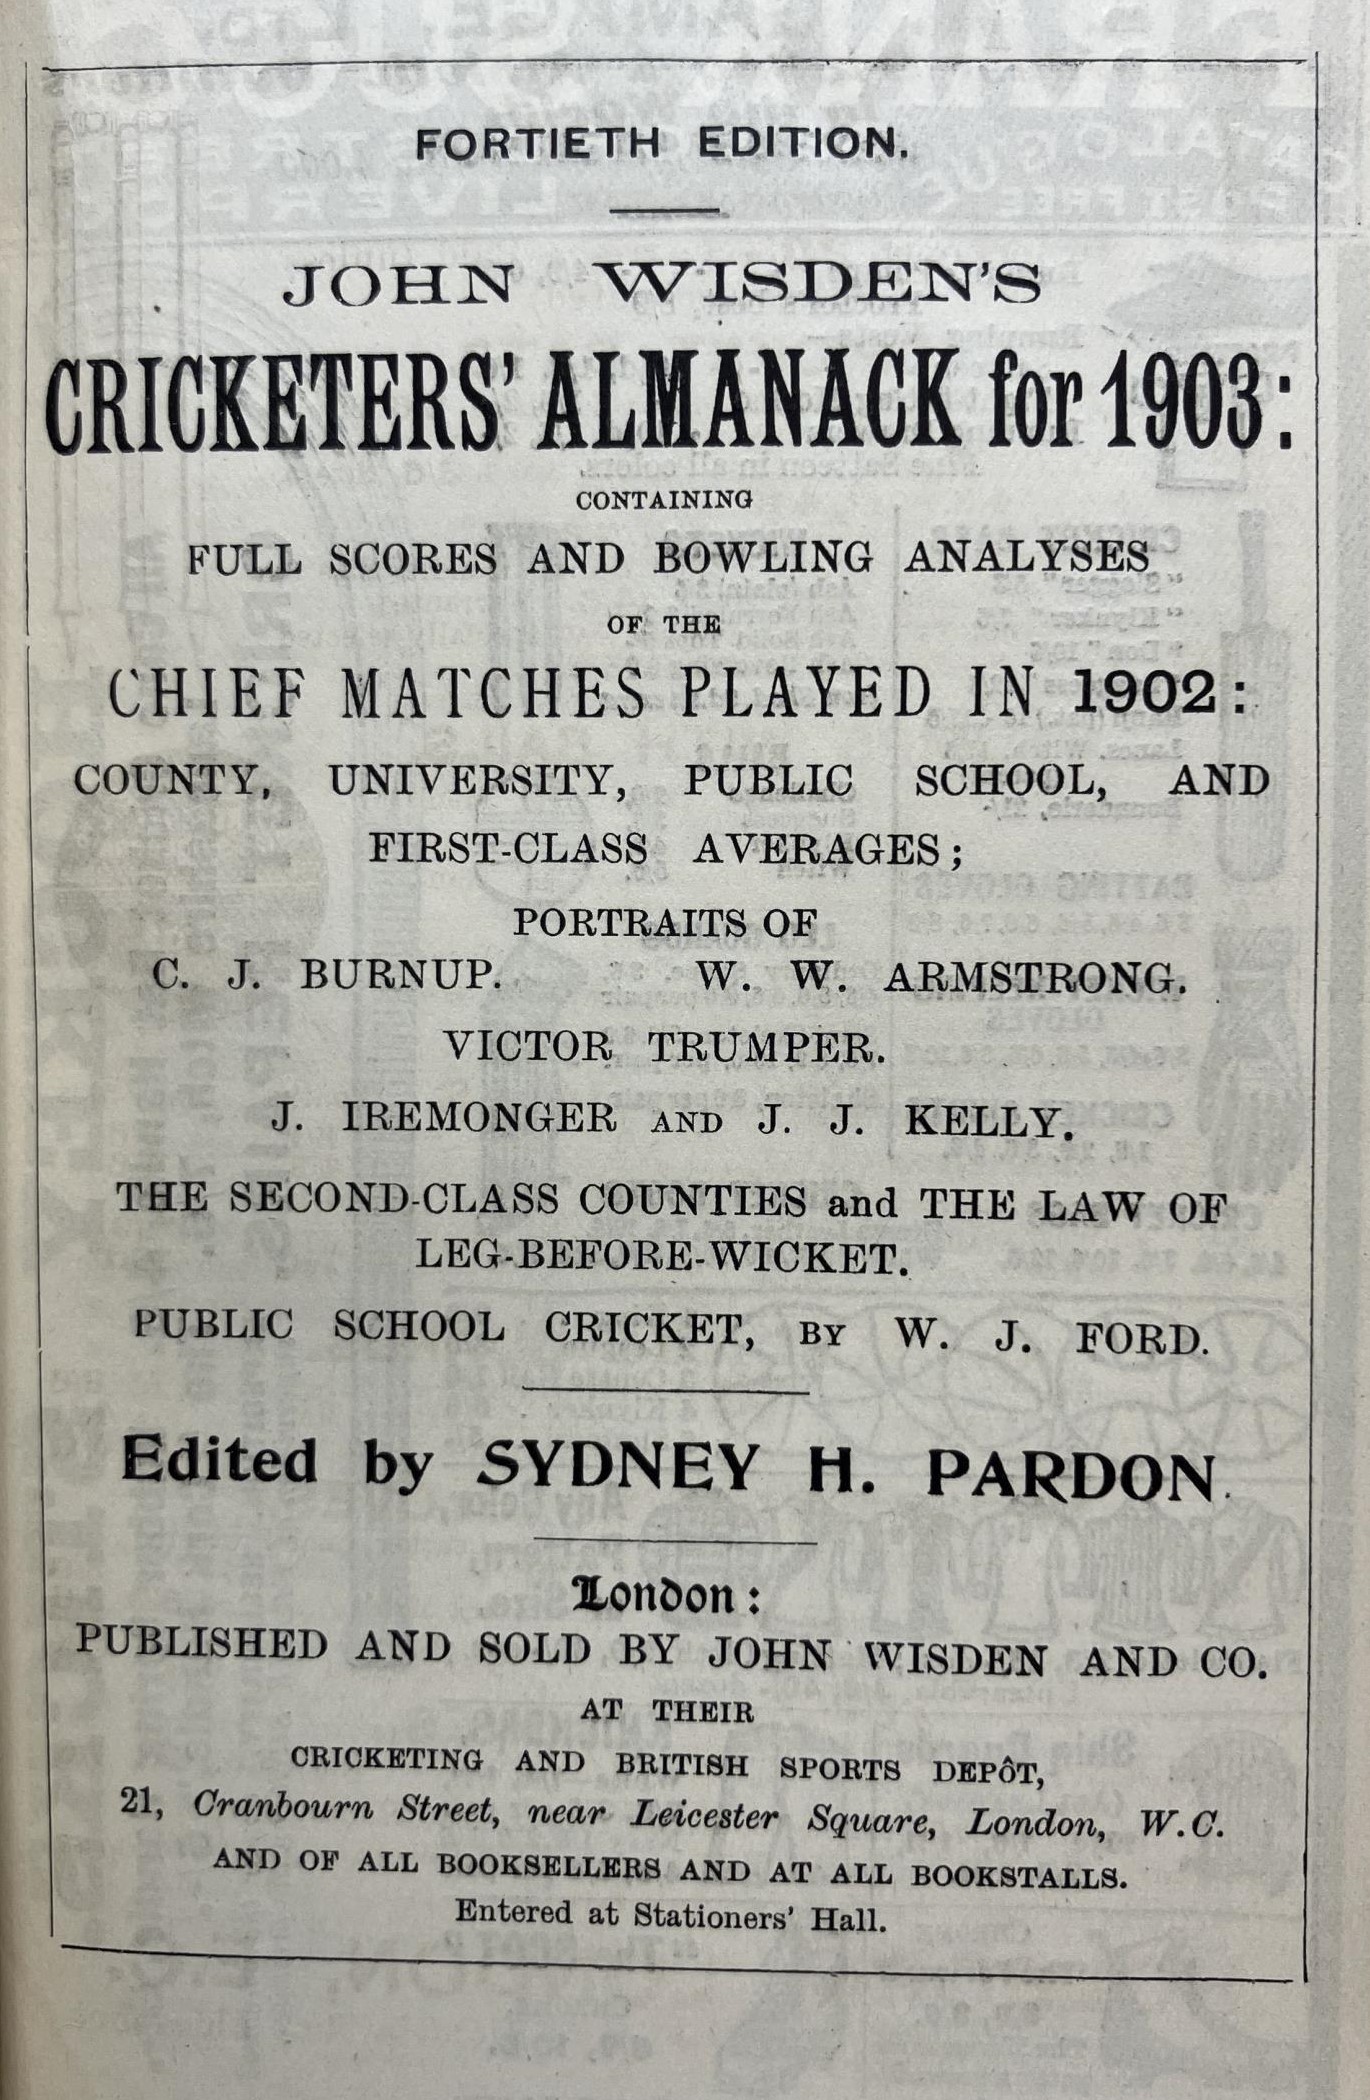 A Wisden Cricketers' Almanack, 1903 Provenance:  From the Harry Brewer Cricket Memorabilia